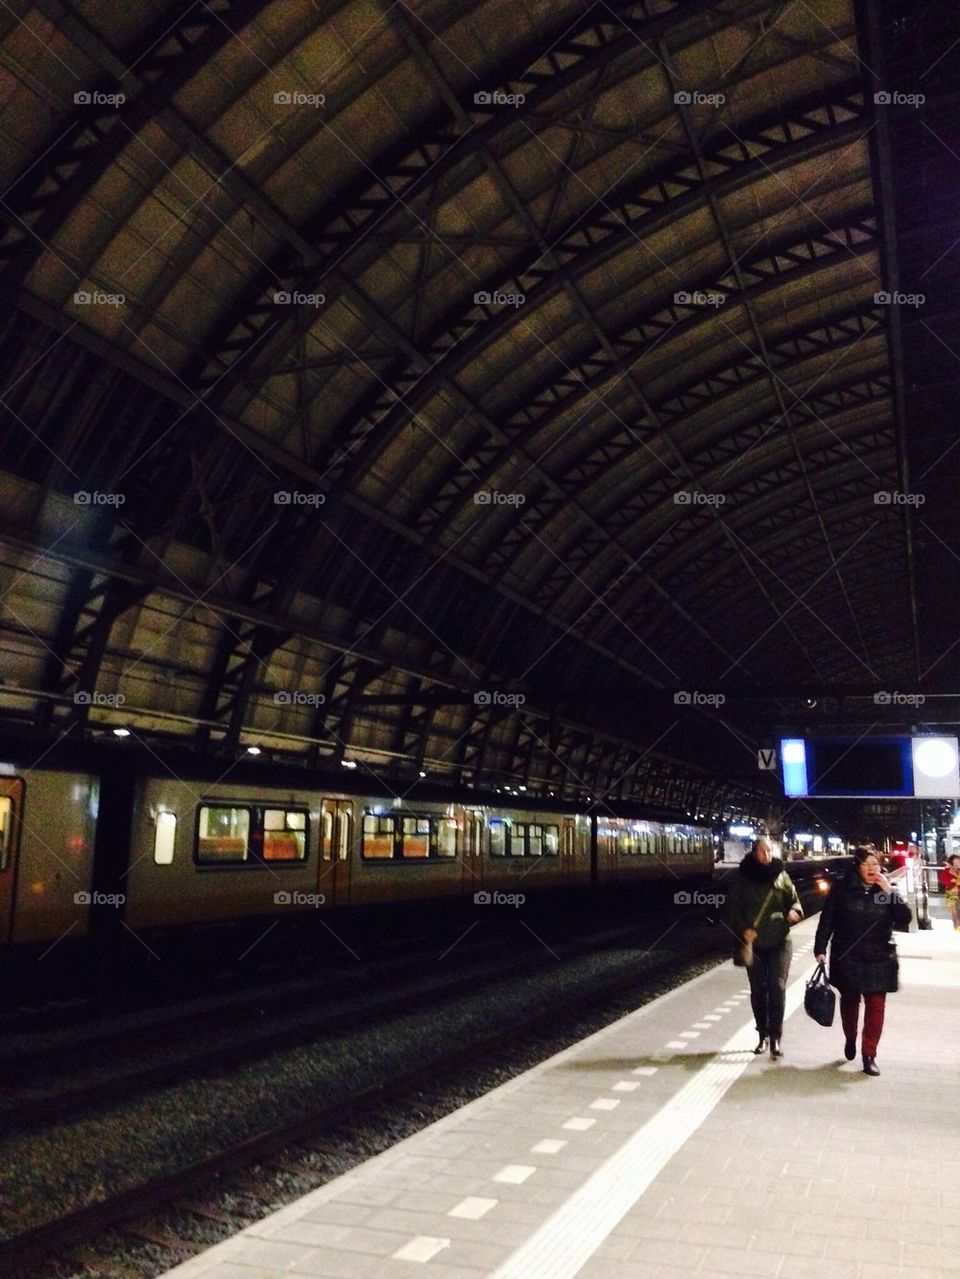 Amsterdam train station 